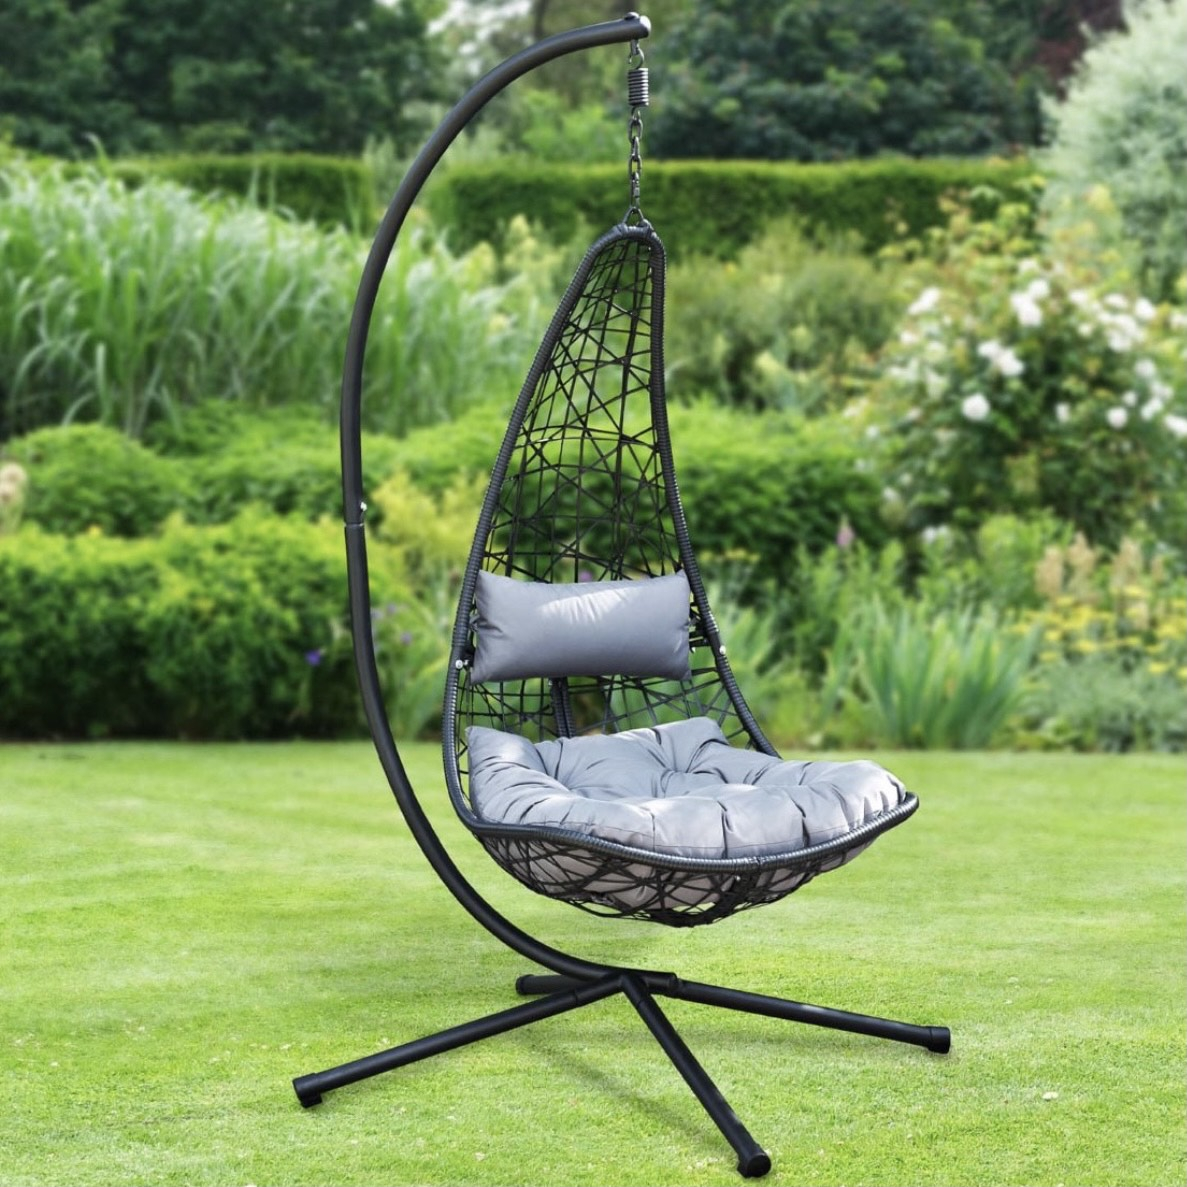 New York Hanging Chair £125 at B&M Retail - hotukdeals